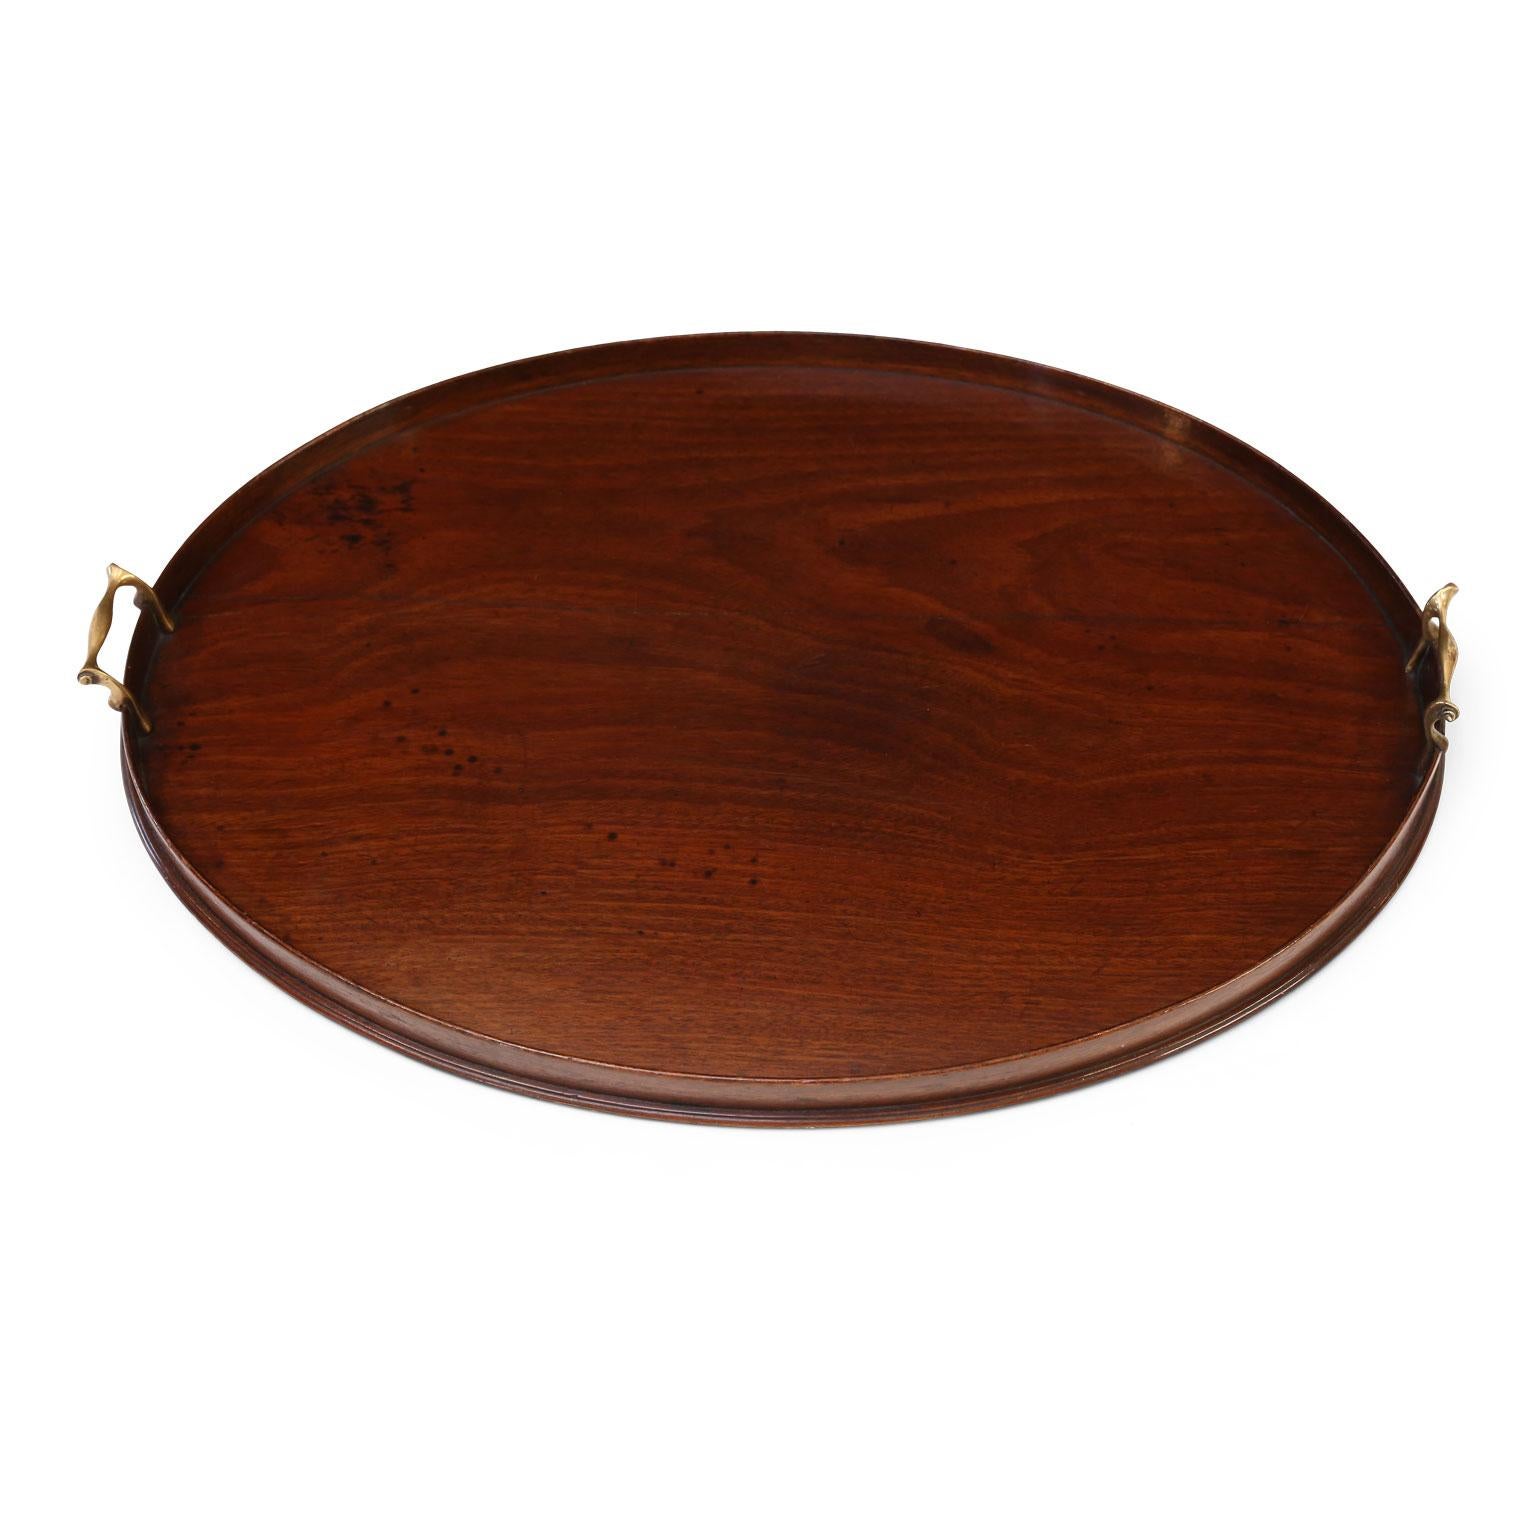 Fine oval shape Georgian mahogany tray, (circa 1780-1800). Original cast brass handles. Excellent condition.